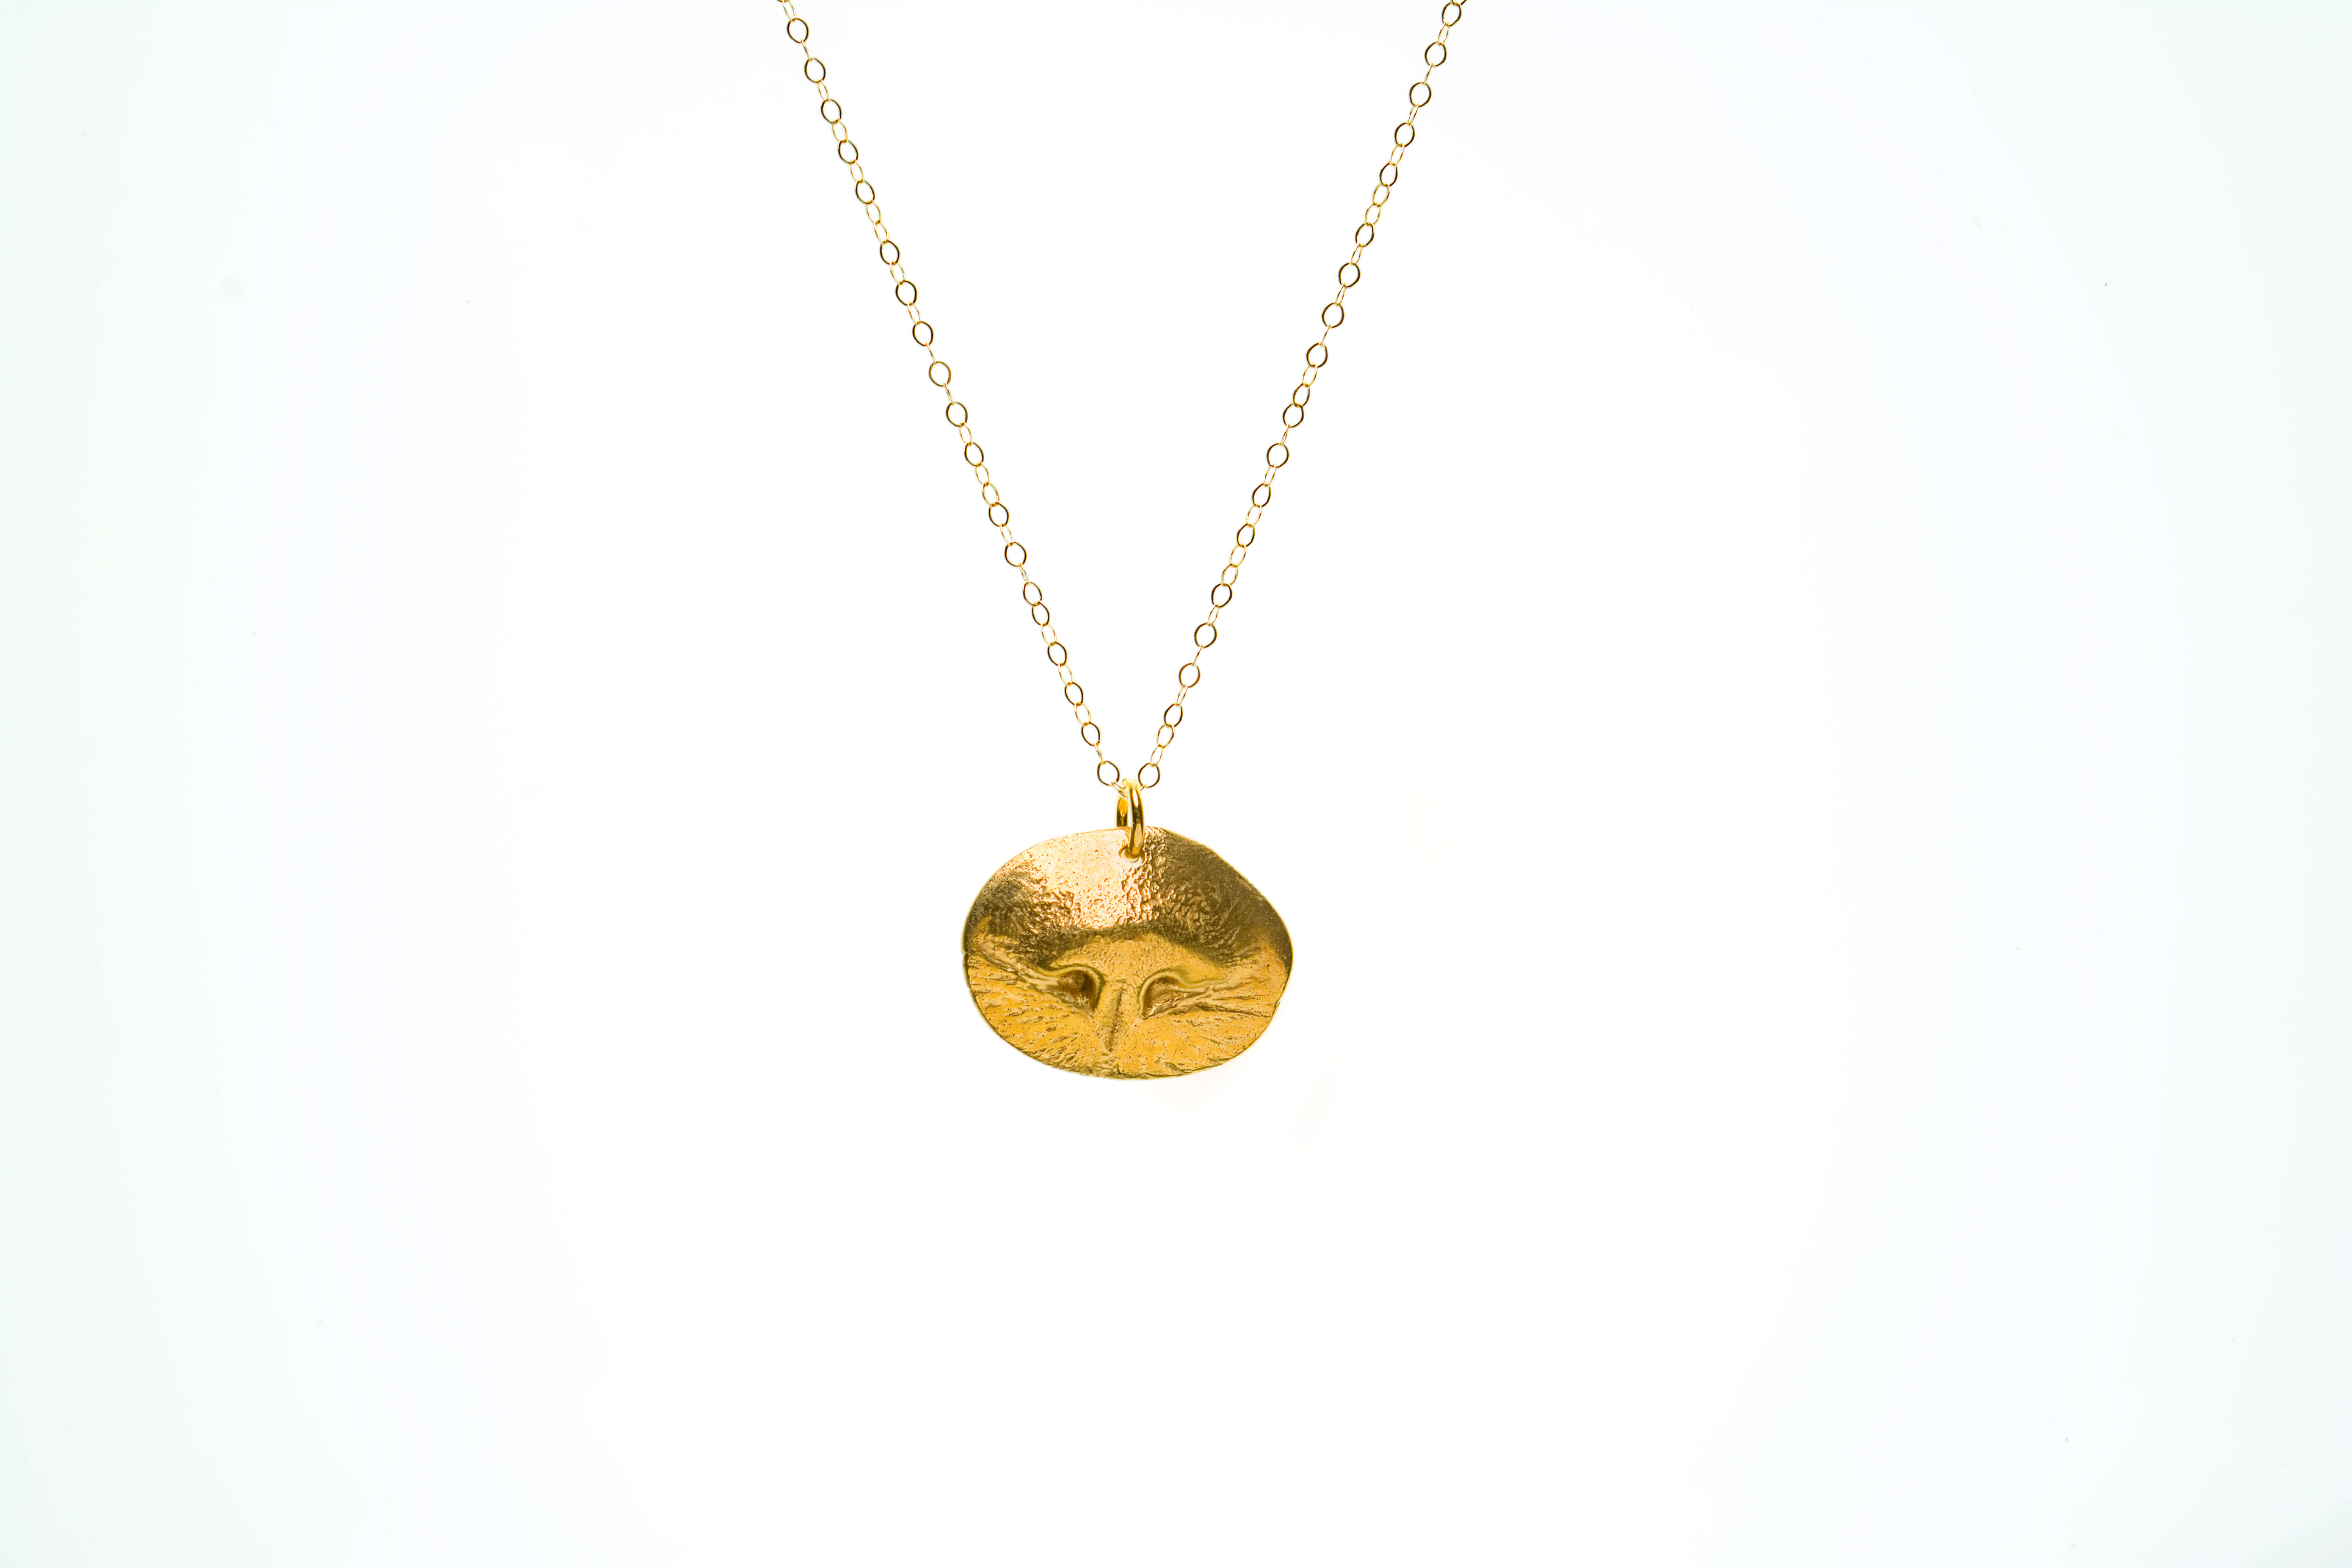 Precious metal prints pet nose pendant necklace in gold